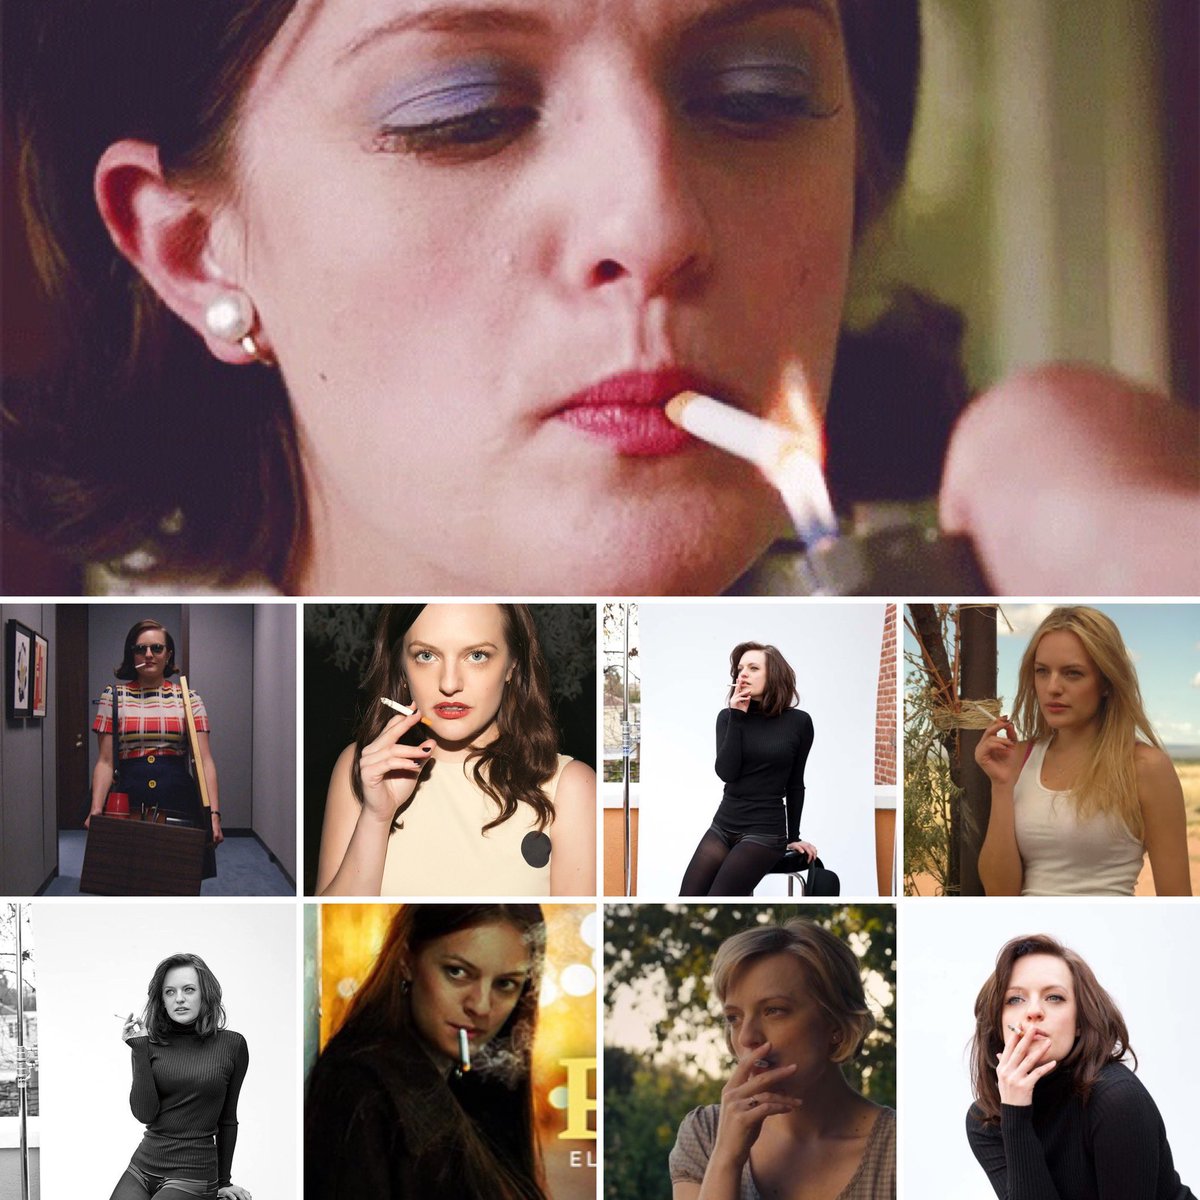 #smoking #hot #film #actress #actor #ElisabethMoss #sexy #movie #smoke #cigarette #filmtwitter #filmtwt #watch #singer #music #models #model #art #madmen #tv #drama 

Smoking Actresses / Singers / Models

No.34 : Mad Men (2007-2015)

Part 2 of 3

Elisabeth Moss